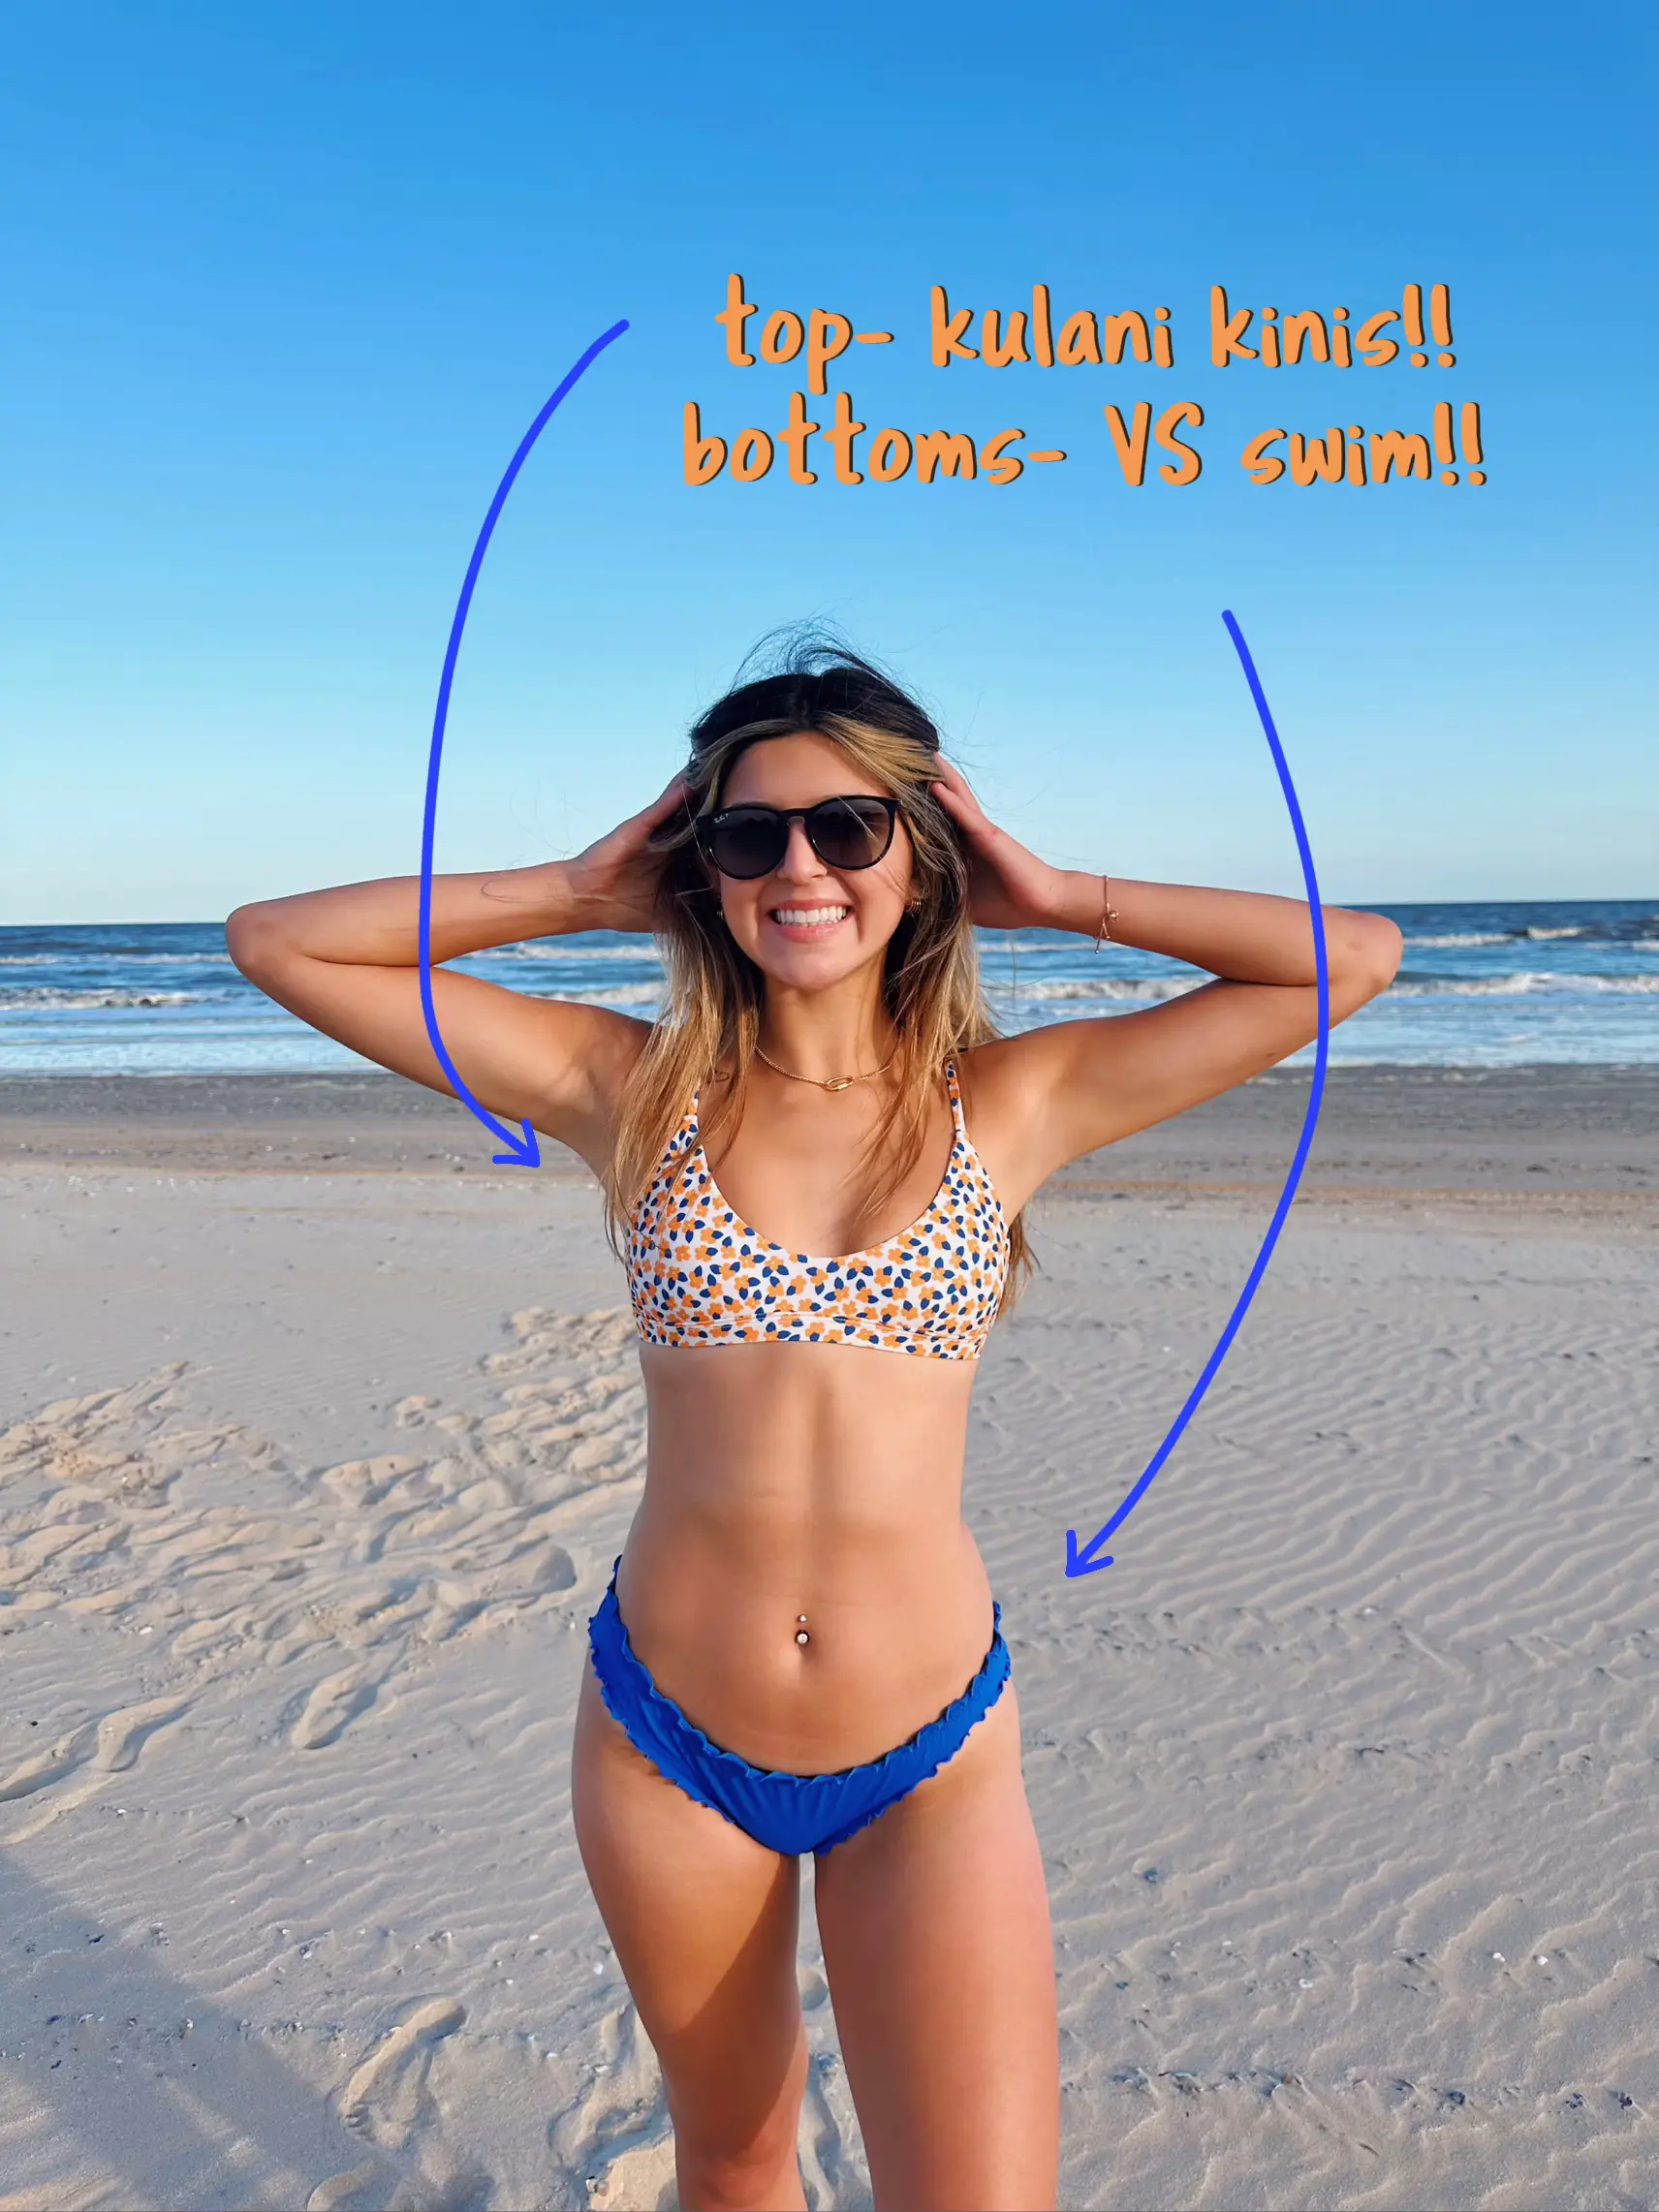 Swimsuits For All Women's Plus Size Confidante Bra Sized Underwire Bikini  Top - 36 F, Blue : Target